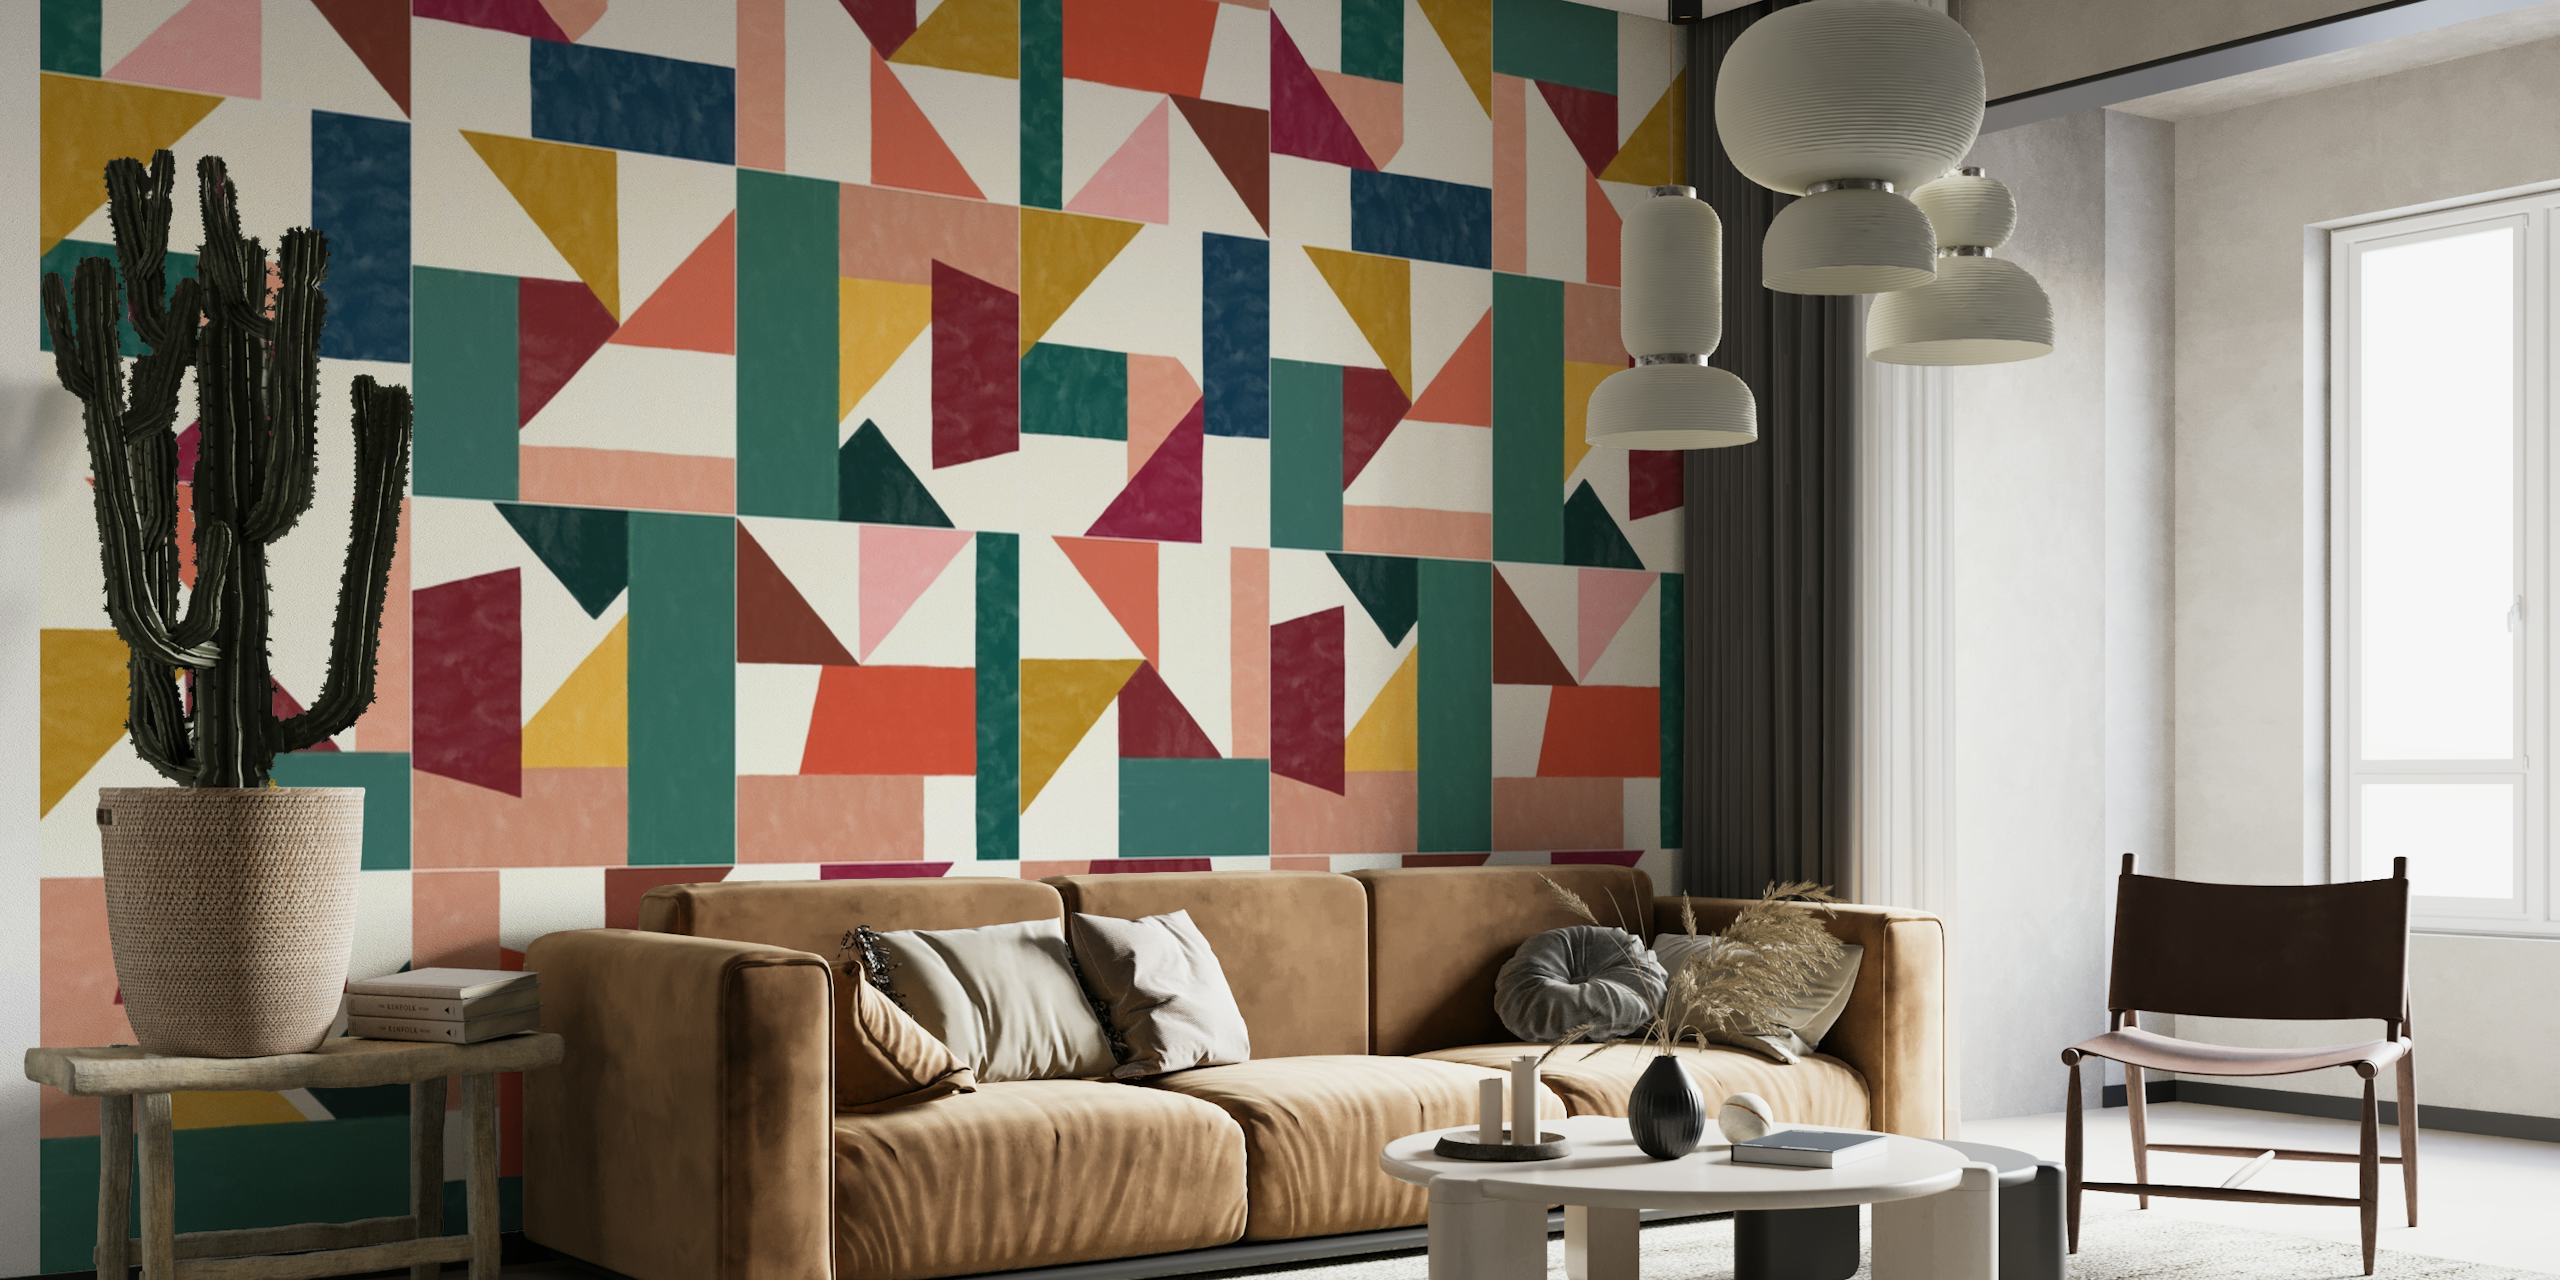 Tangram Wall Tiles One papiers peint